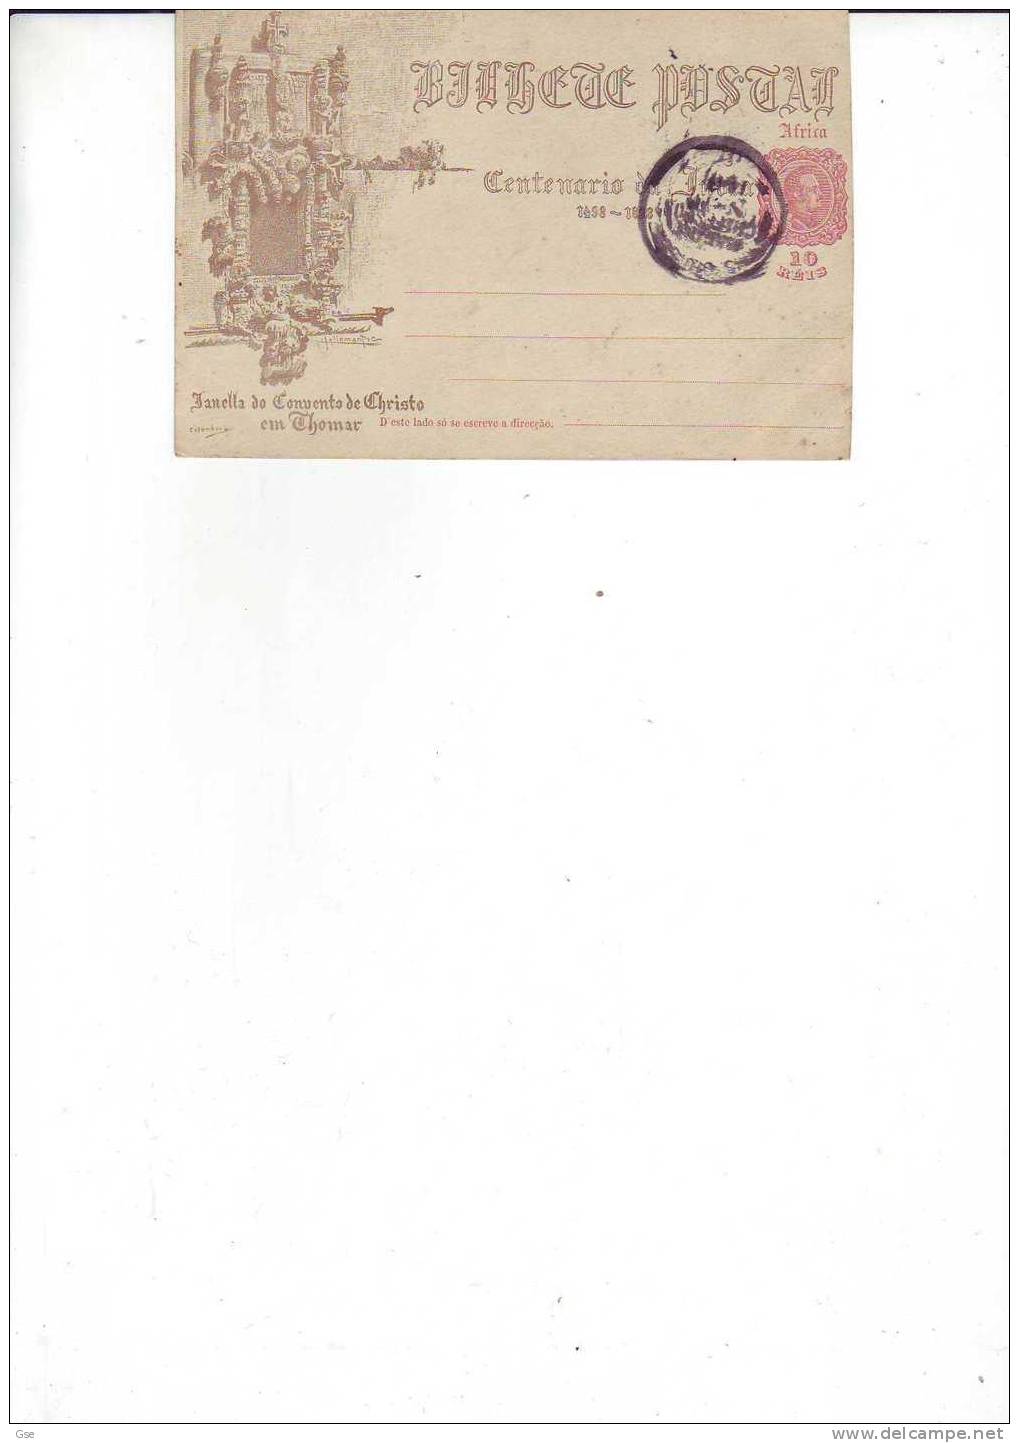 AFRICA PORTOGHESE- - Cartolina Postale Usata . "Fanella Do Convento De Cristo" - Portugiesisch-Afrika